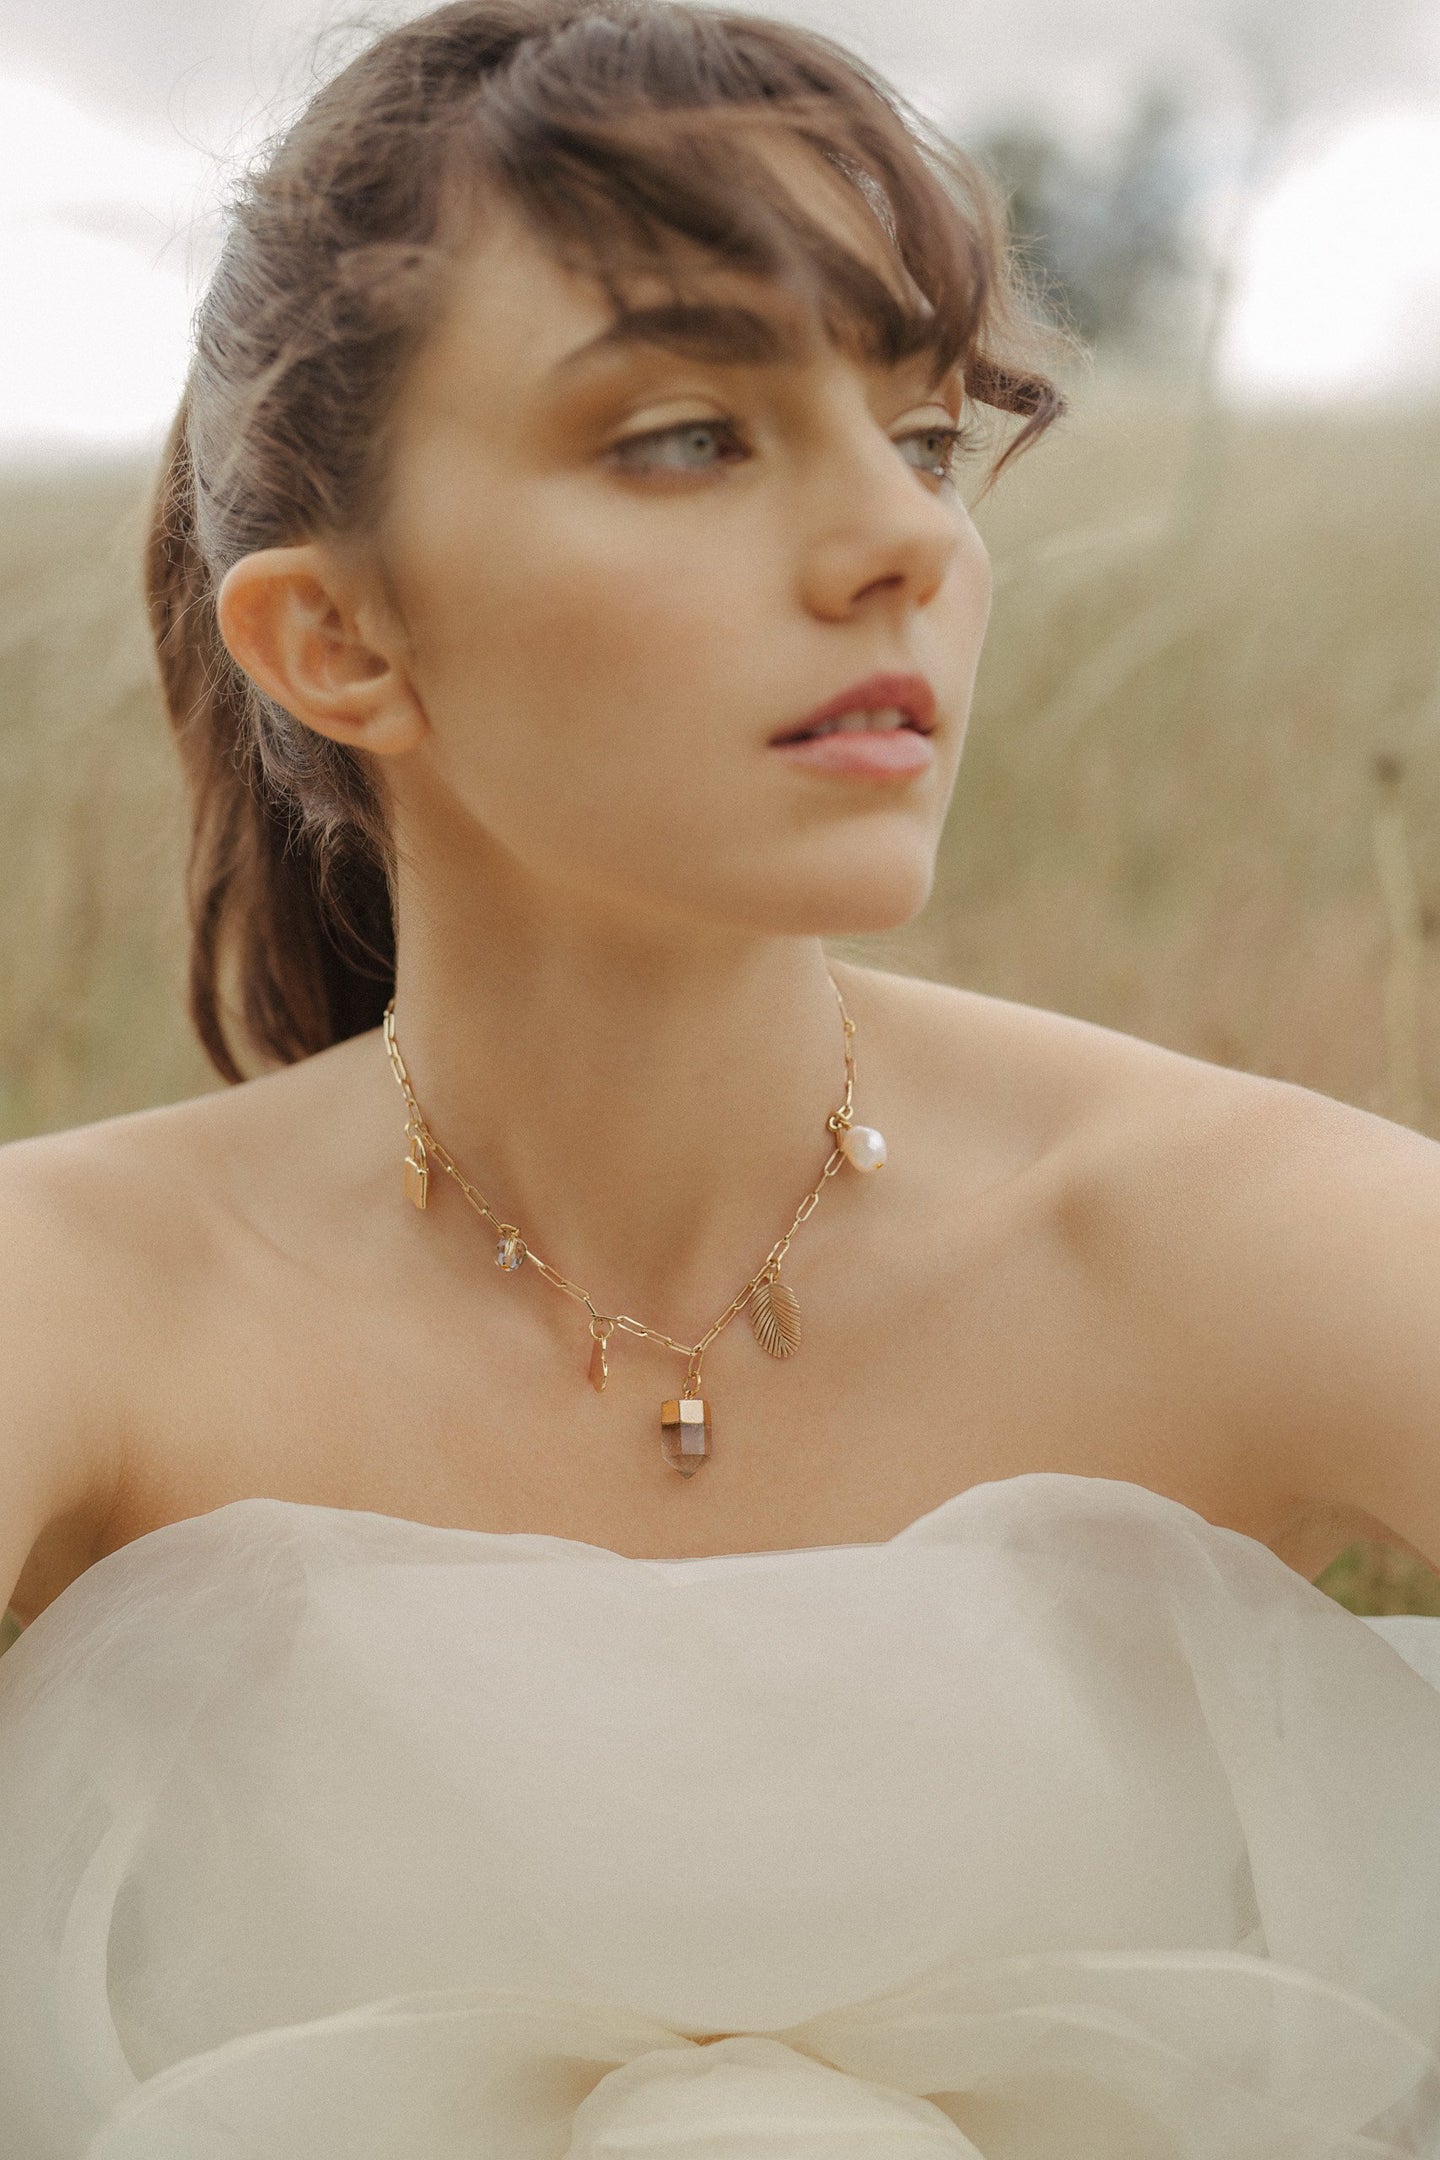 Healing Gemstone Necklaces. tiana jewel